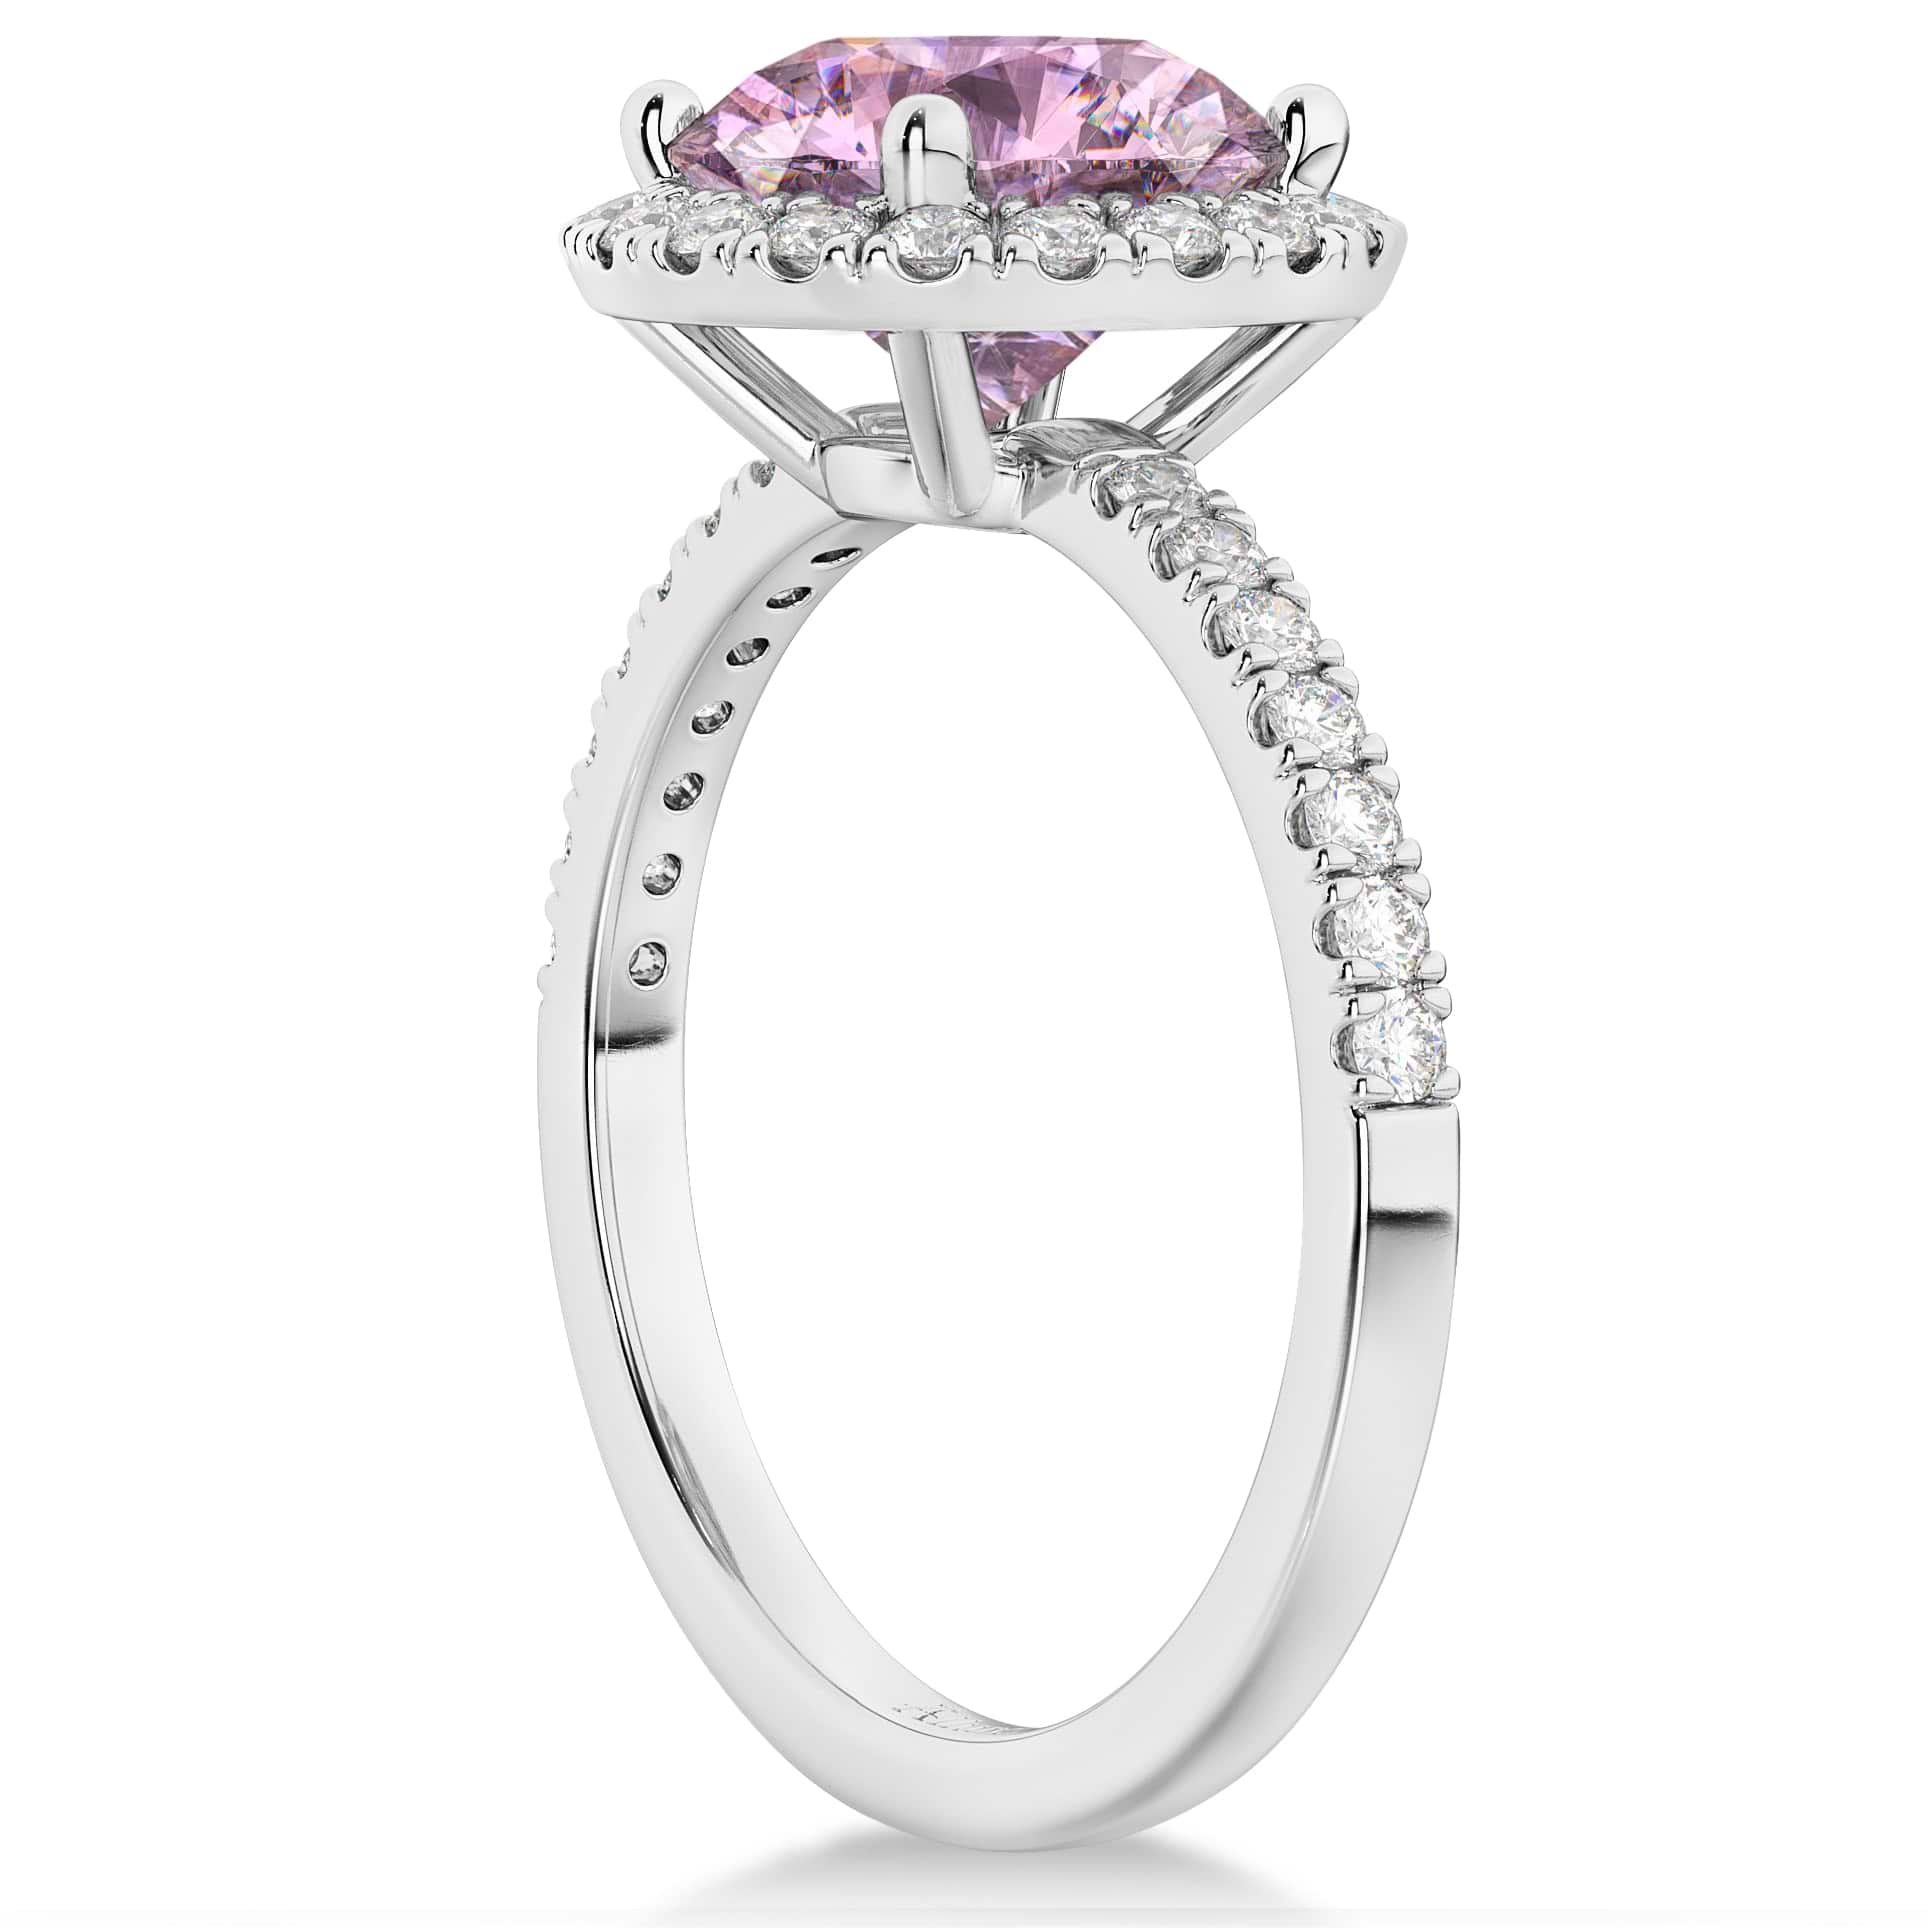 Halo Pink Moissanite & Diamond Engagement Ring 14K White Gold 2.10ct